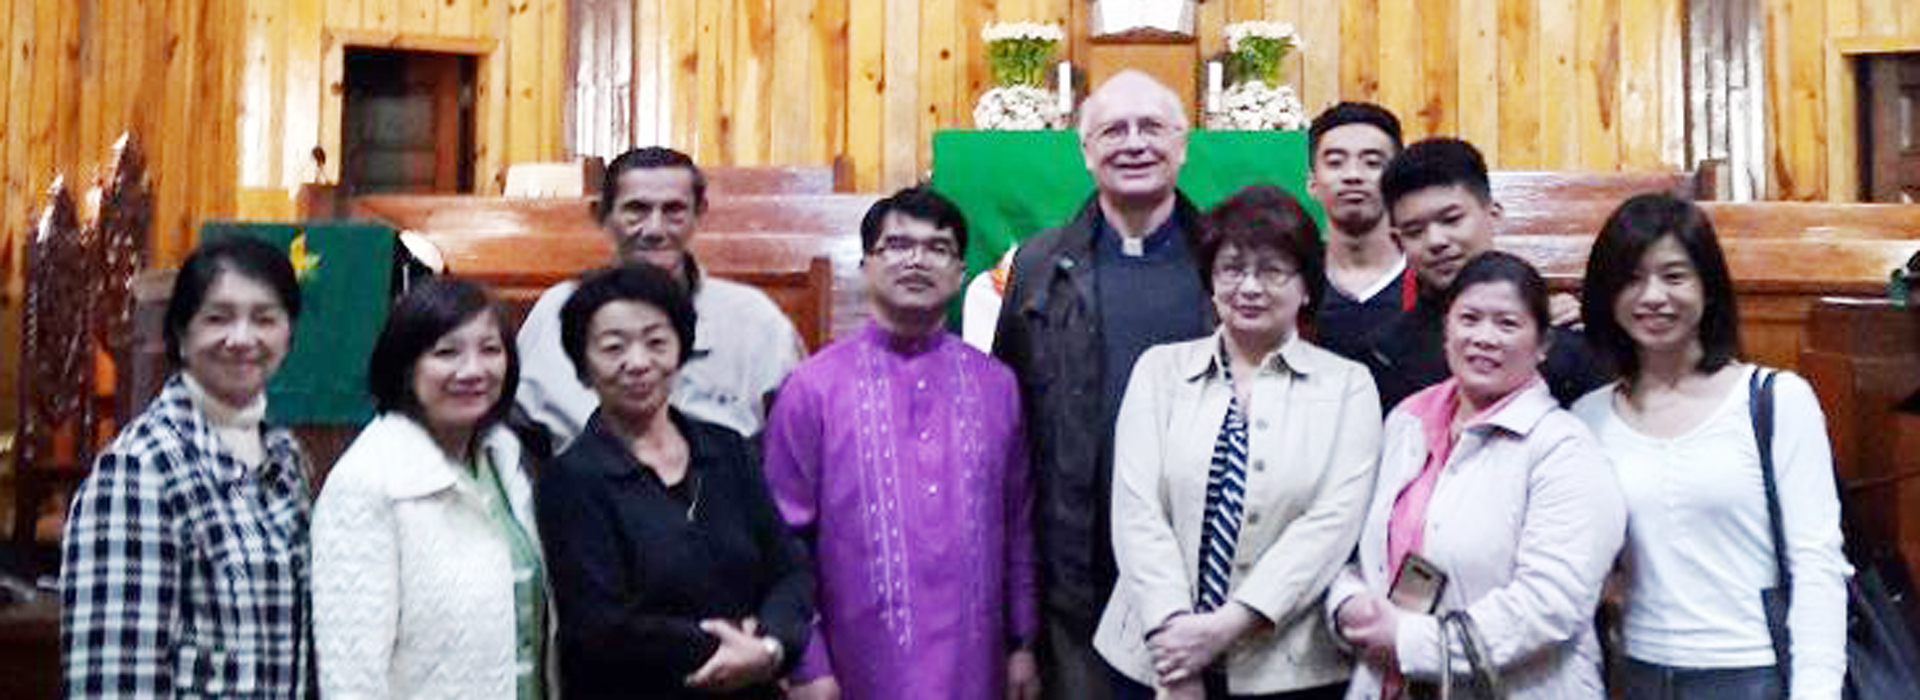 Baguio – Benguet Churches Celebrate Week of Prayer 2018